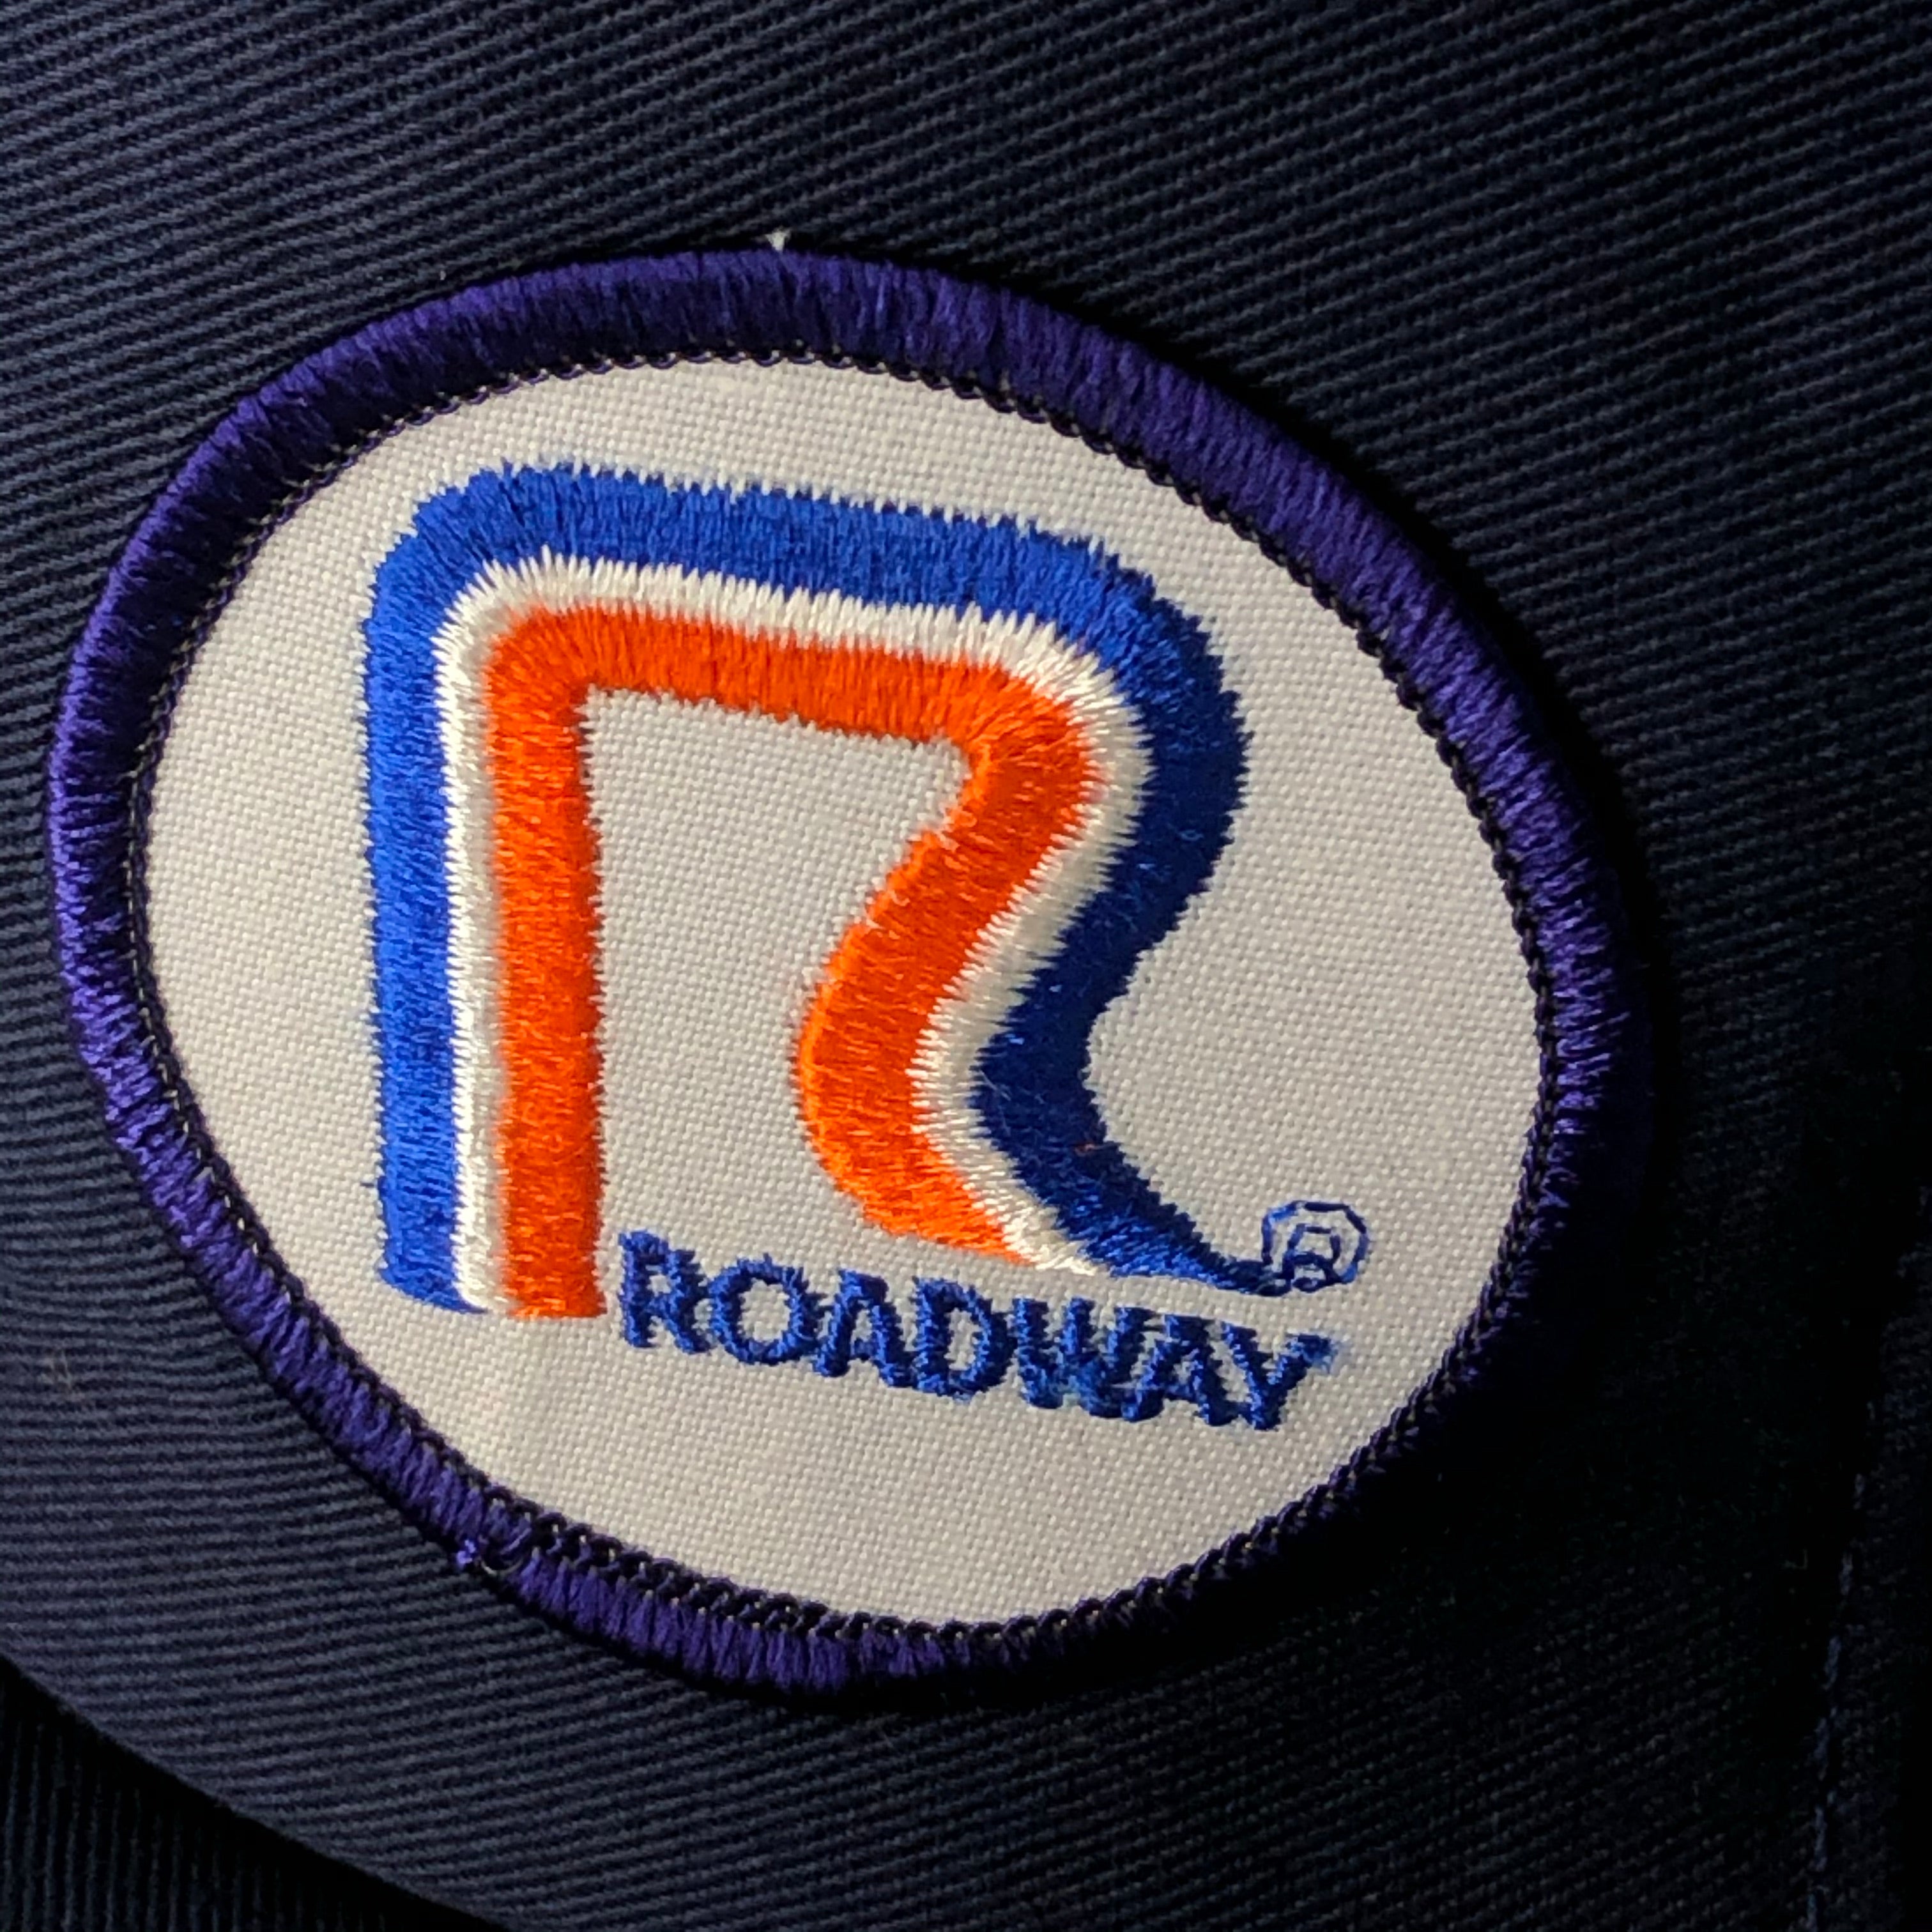 Vintage Roadway Hat